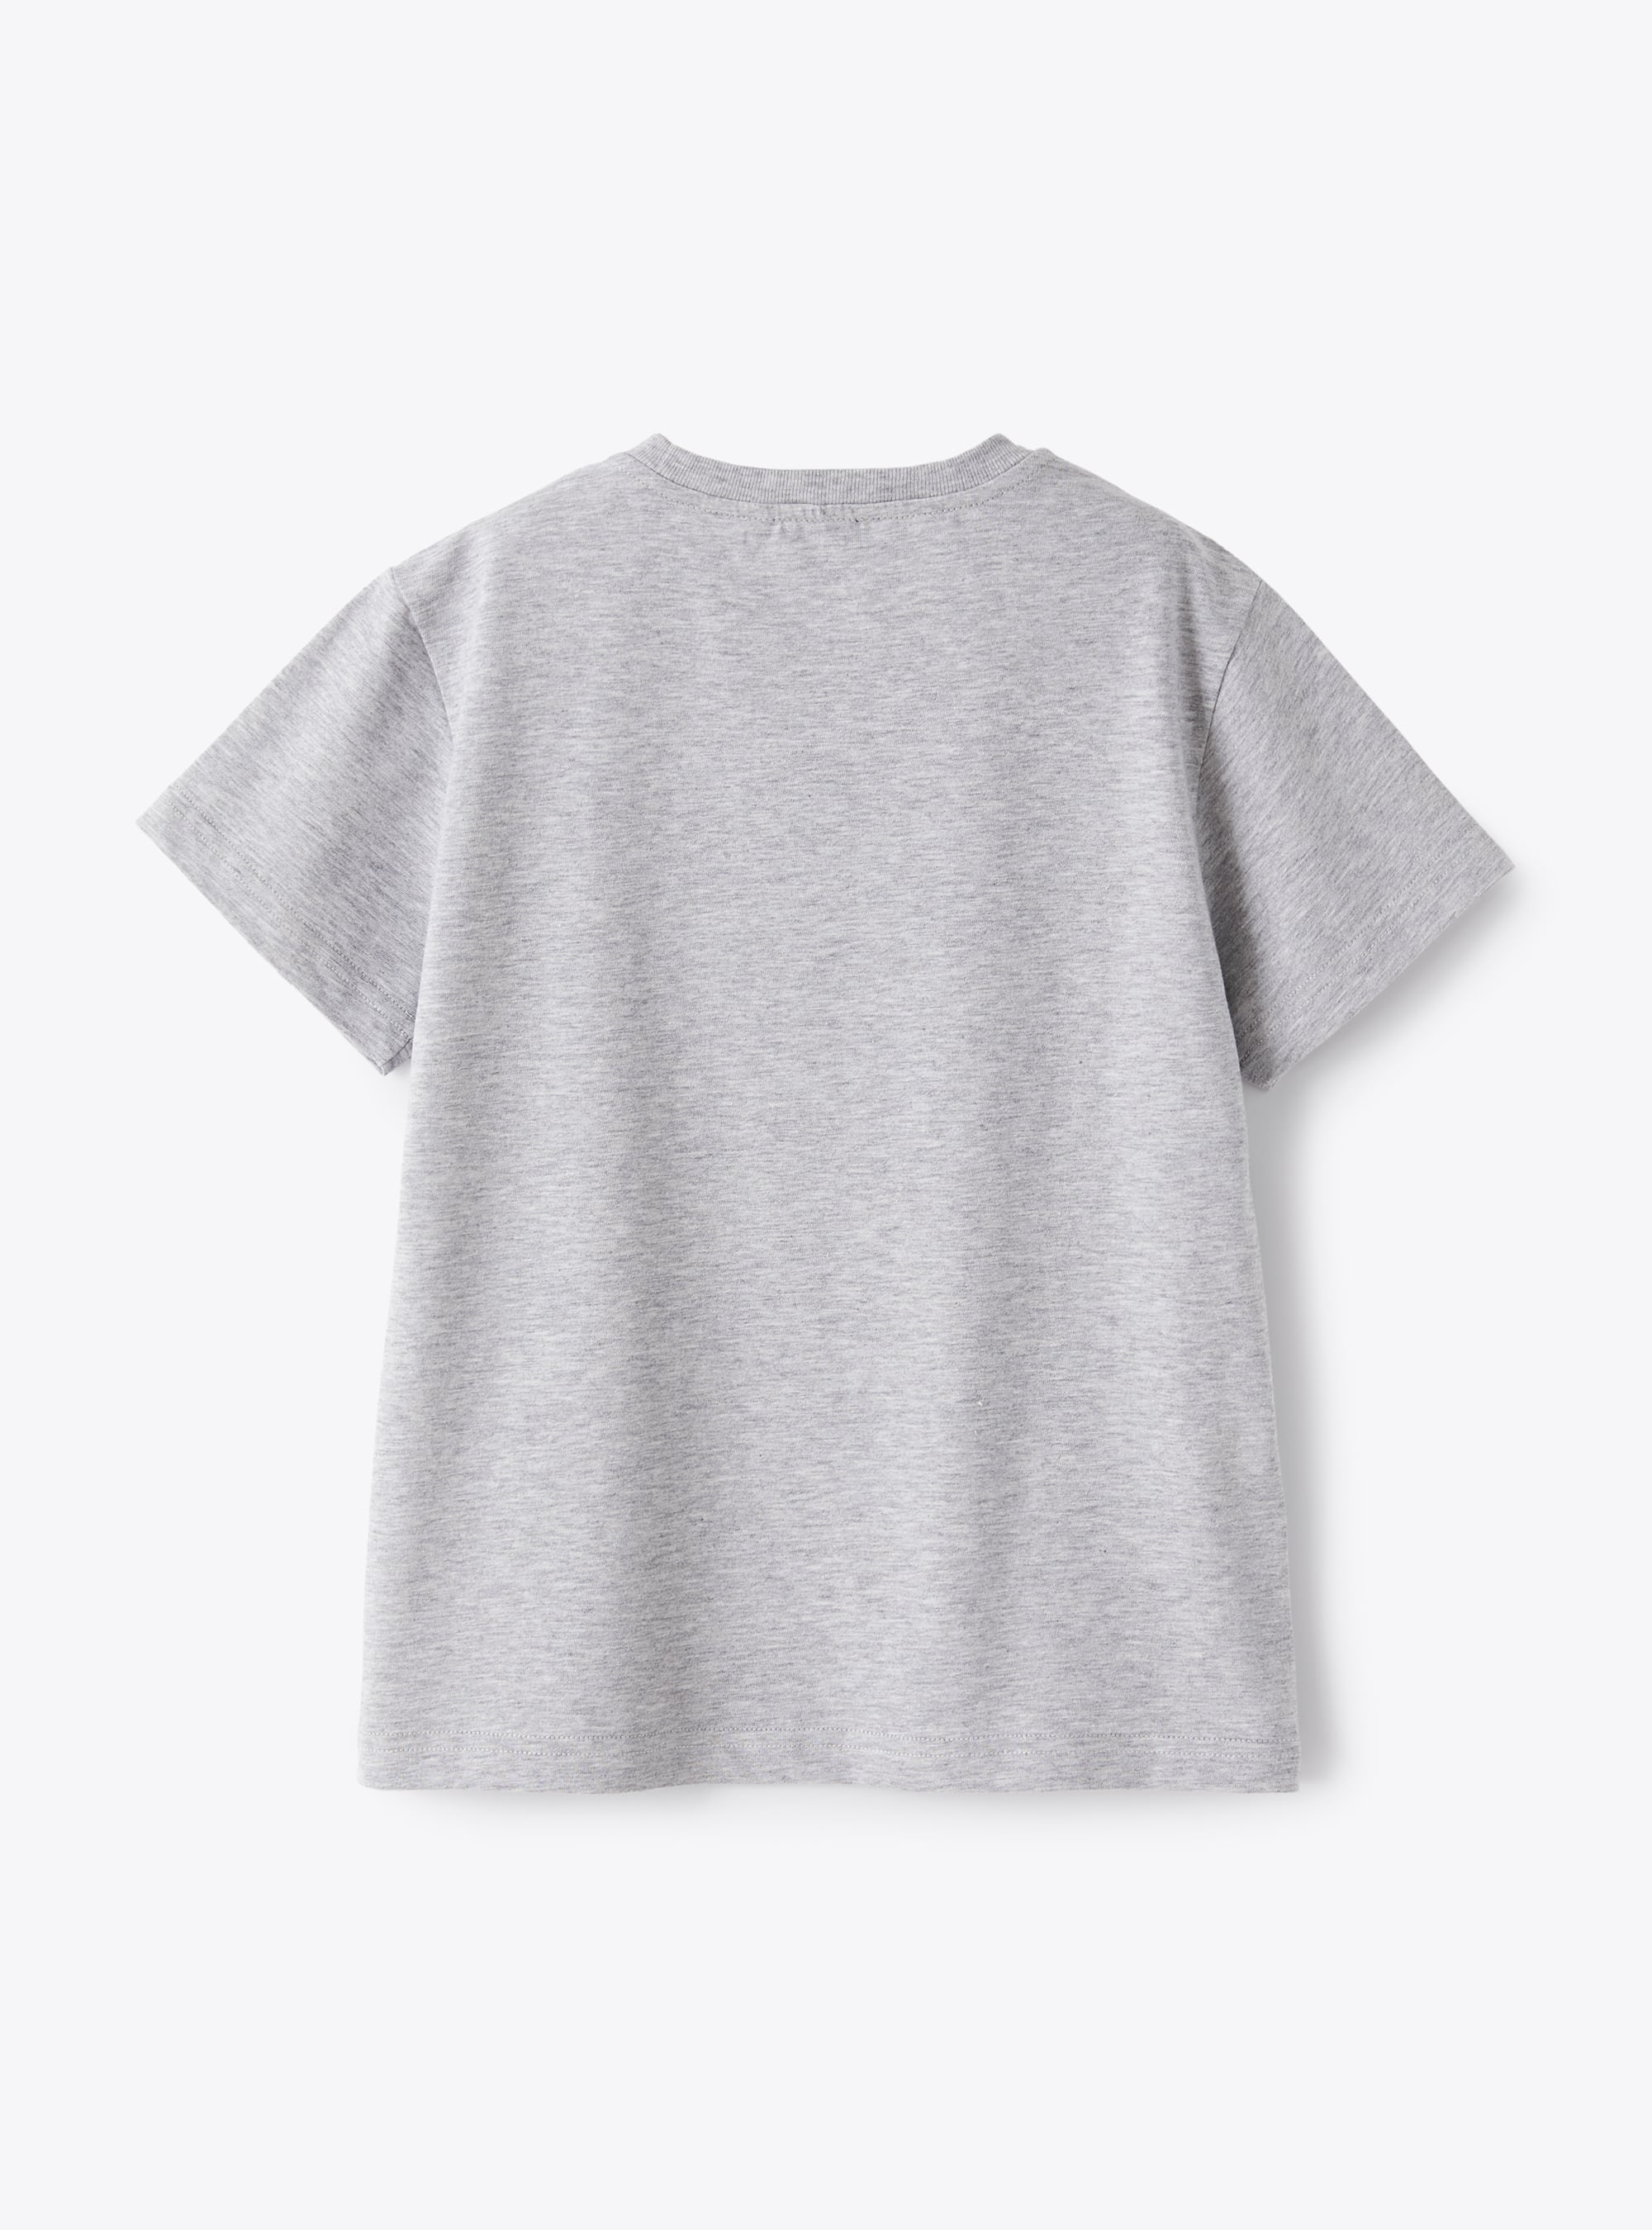 Jersey t-shirt with quad bike print in grey - Grey | Il Gufo